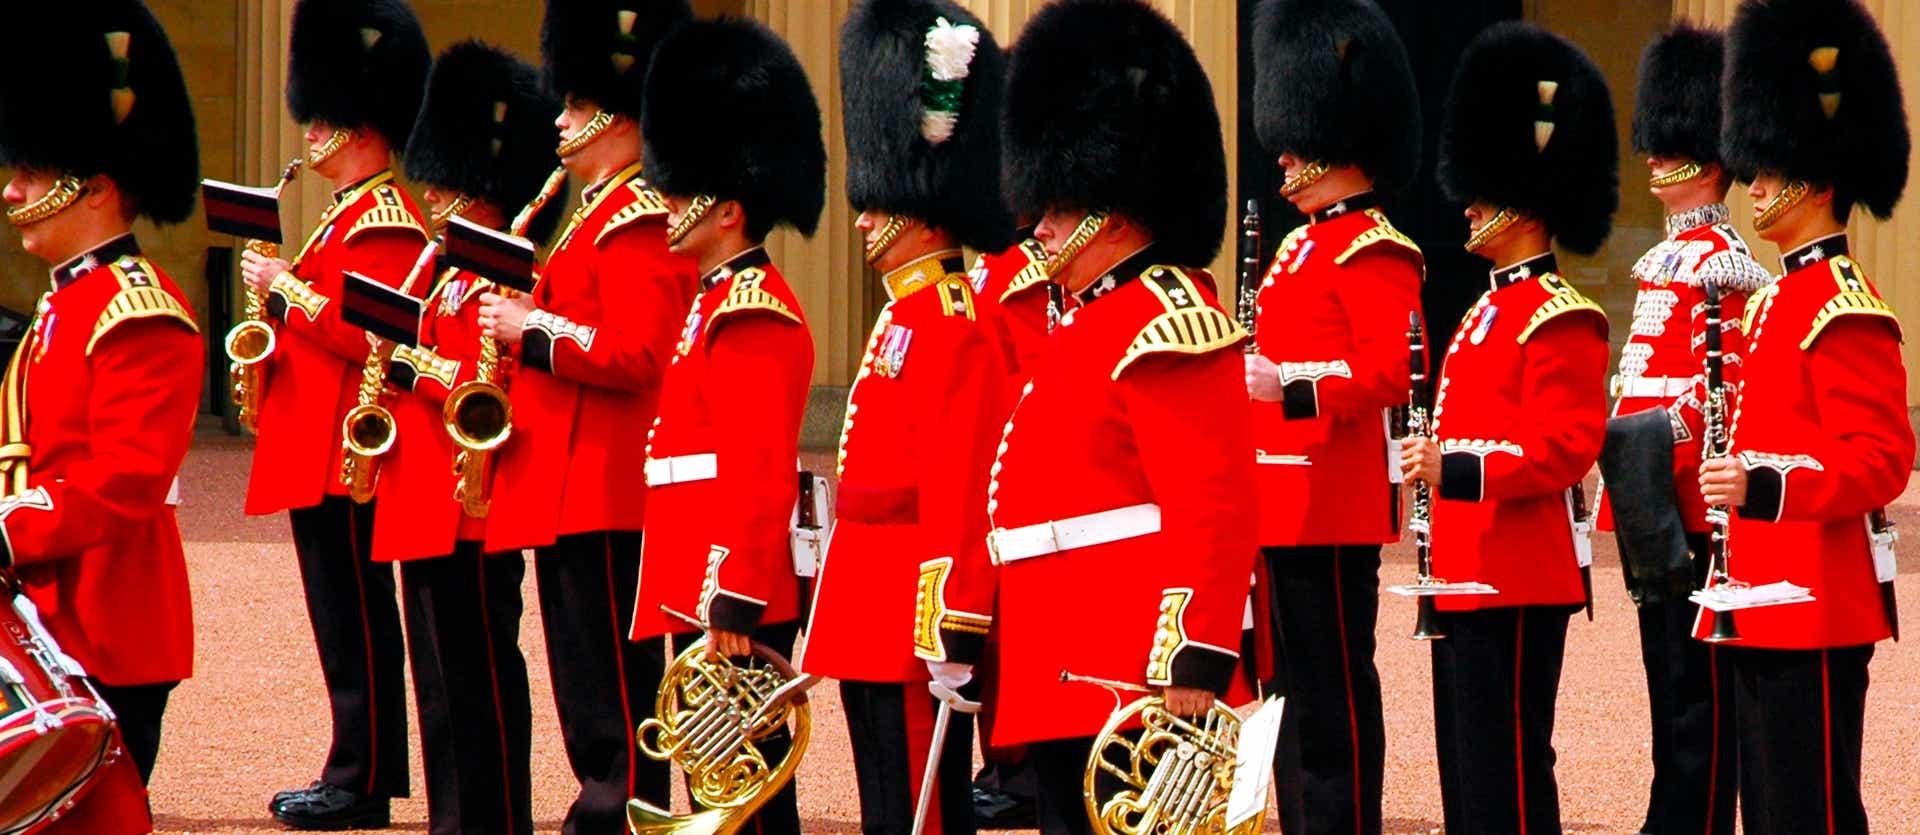 Royal Guard at Buckingham Palace <span class="iconos separador"></span> London <span class="iconos separador"></span> England